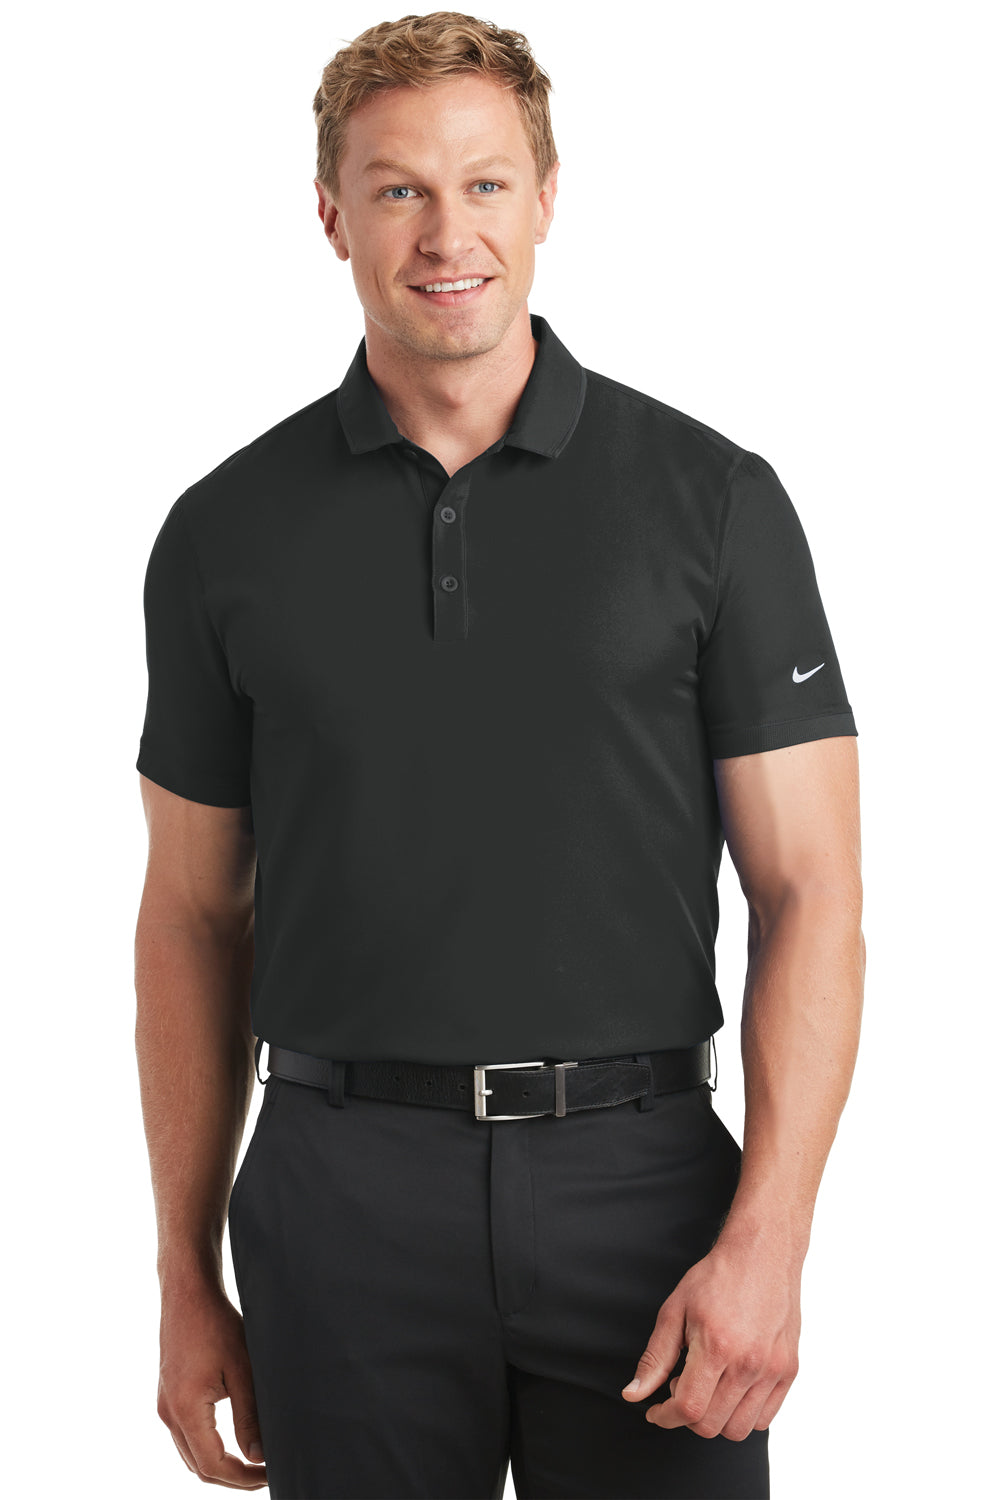 Nike 838958 Mens Dri-Fit Moisture Wicking Short Sleeve Polo Shirt Black Front